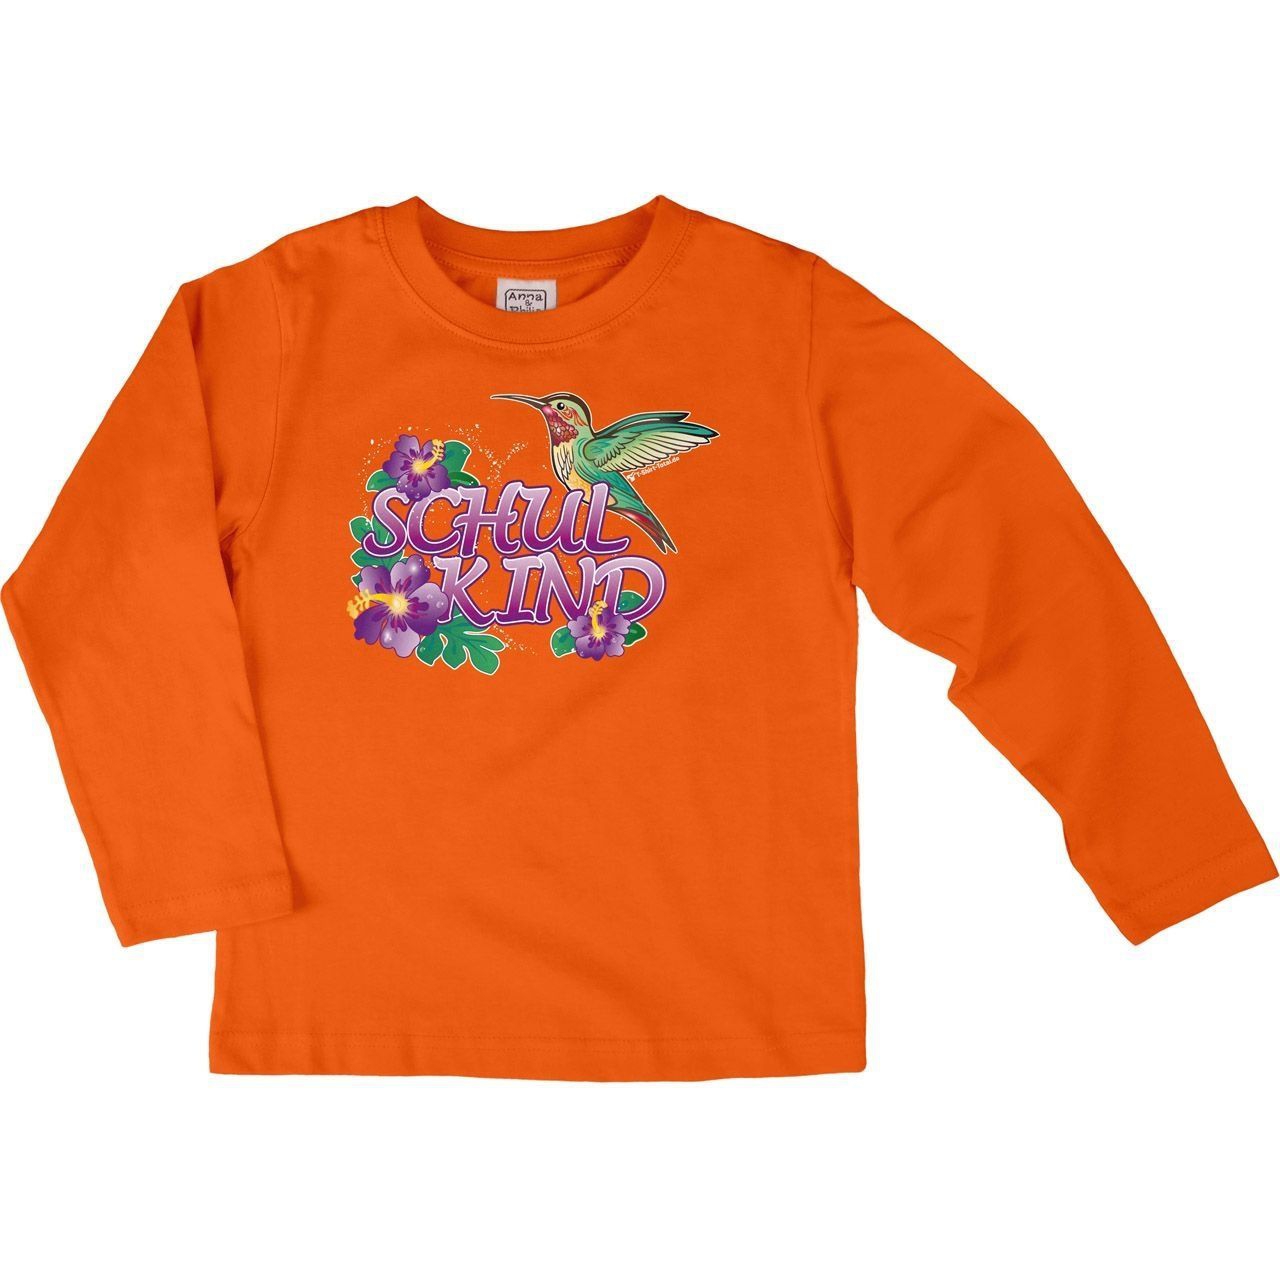 Schulkind Kolibri Kinder Langarm Shirt orange 134 / 140